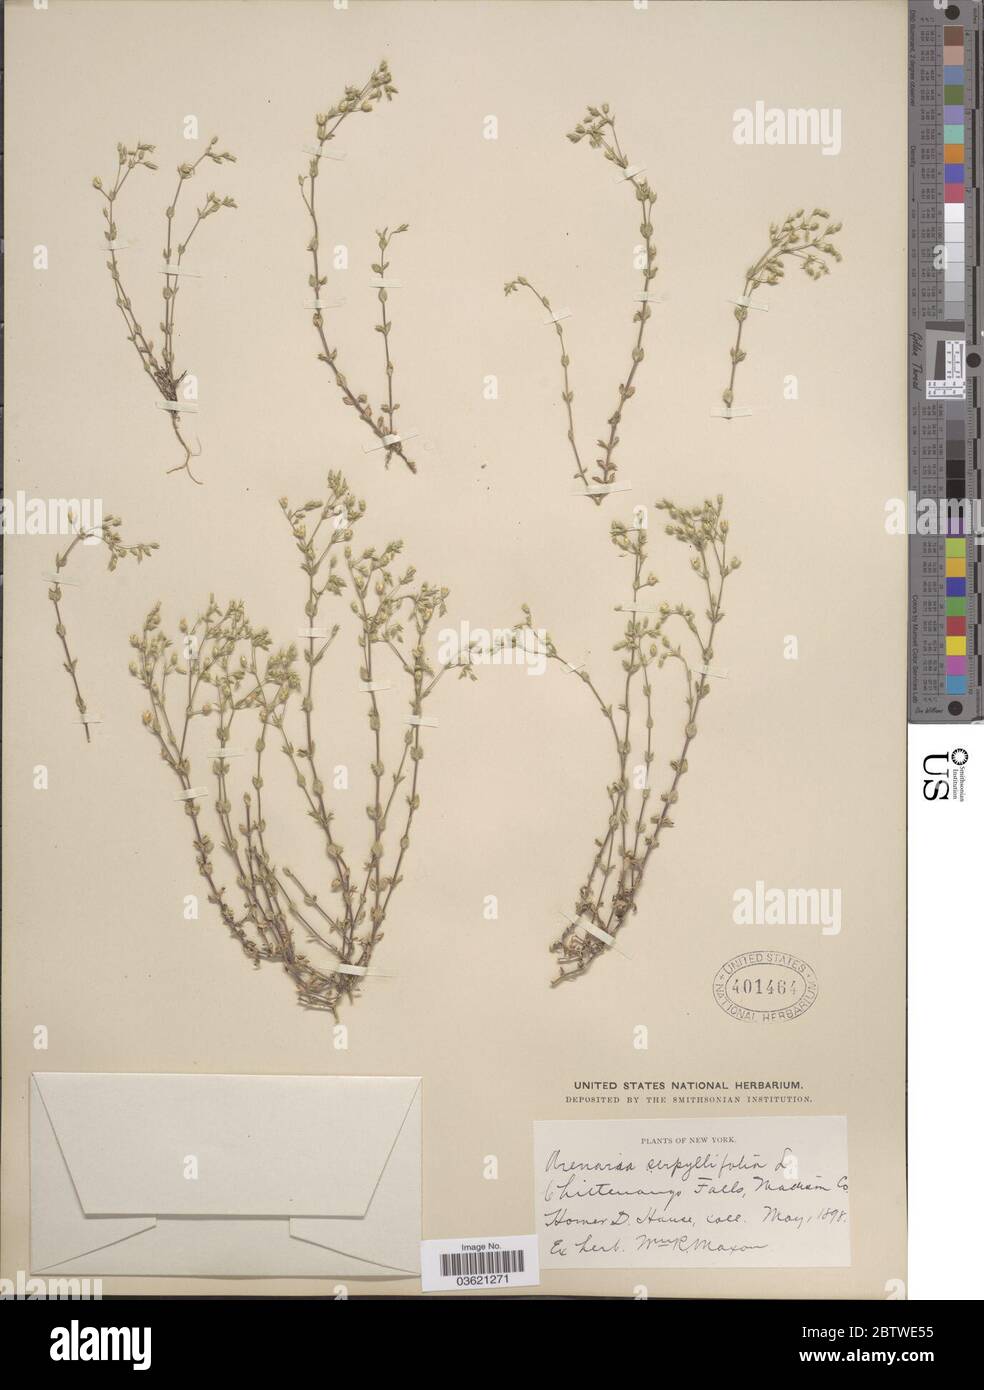 Arenaria serpyllifolia L. Stock Photo